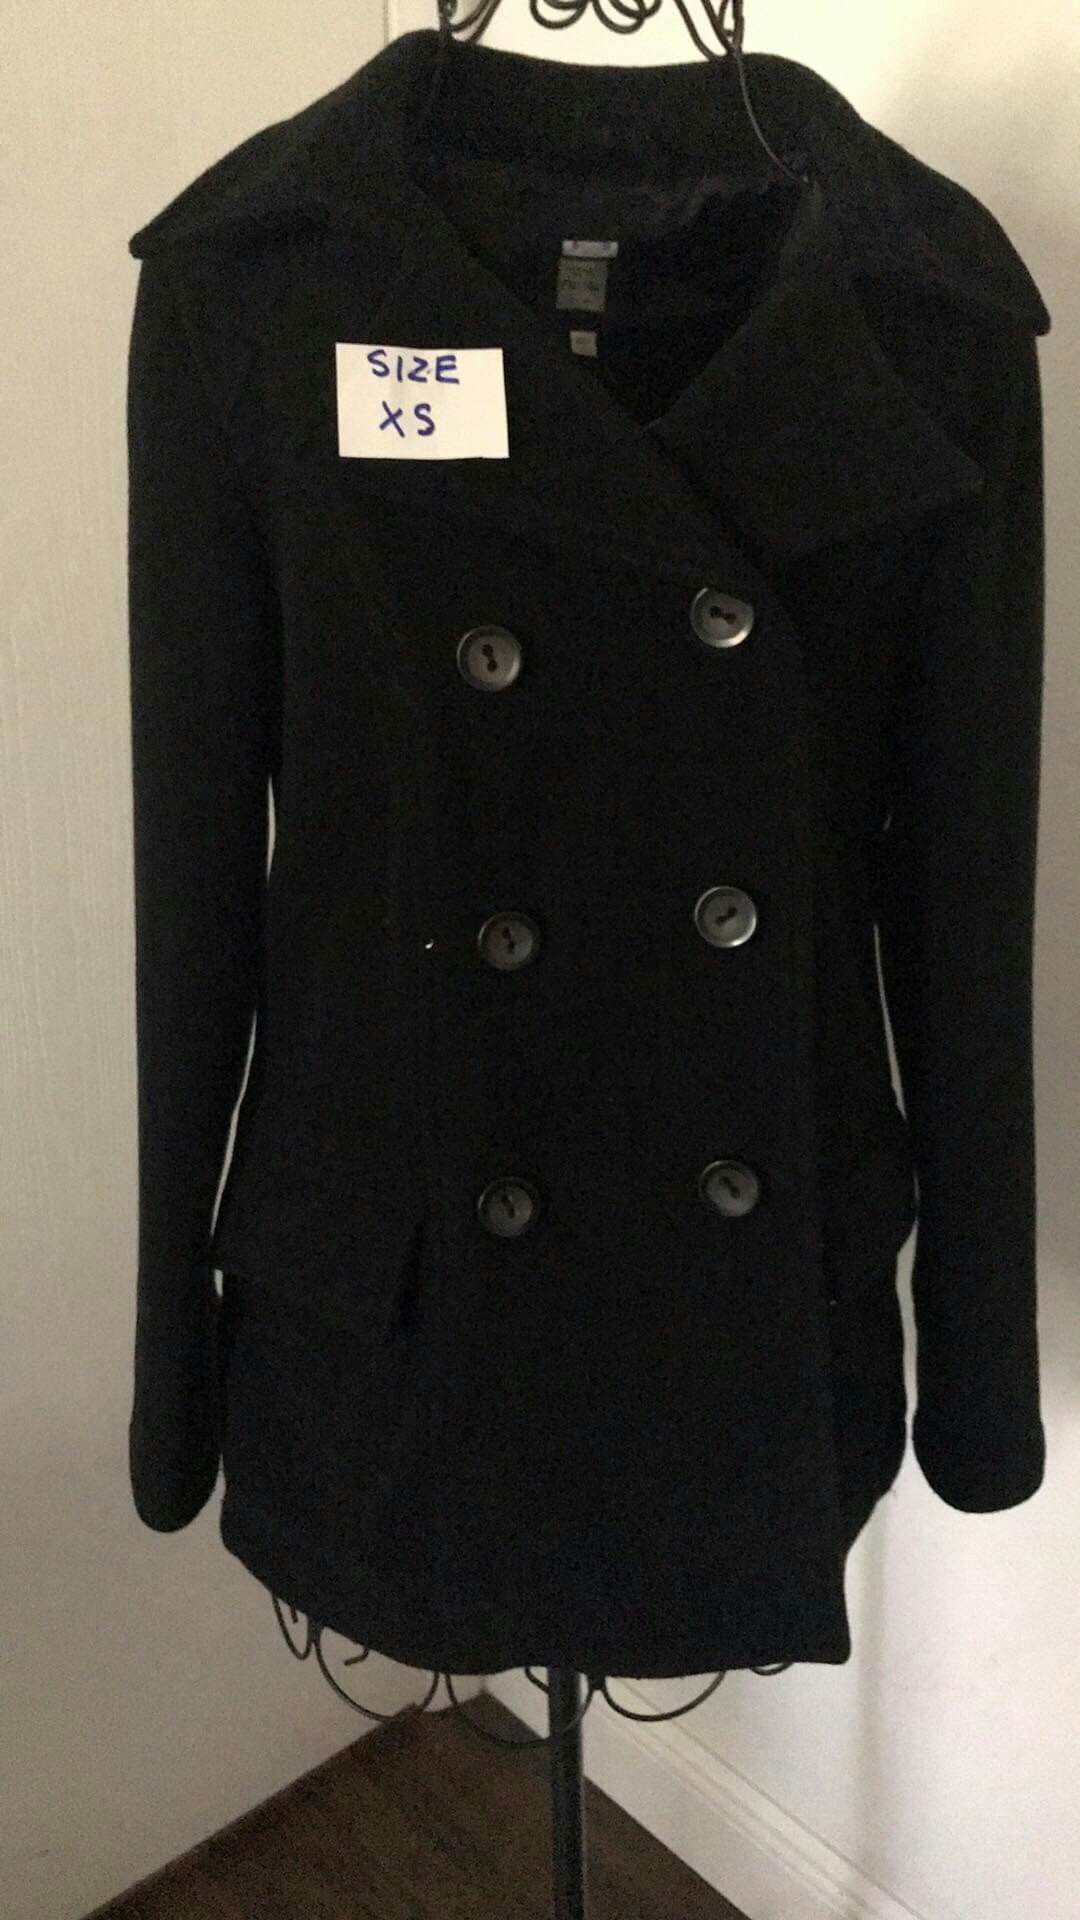 Coat for women size xs